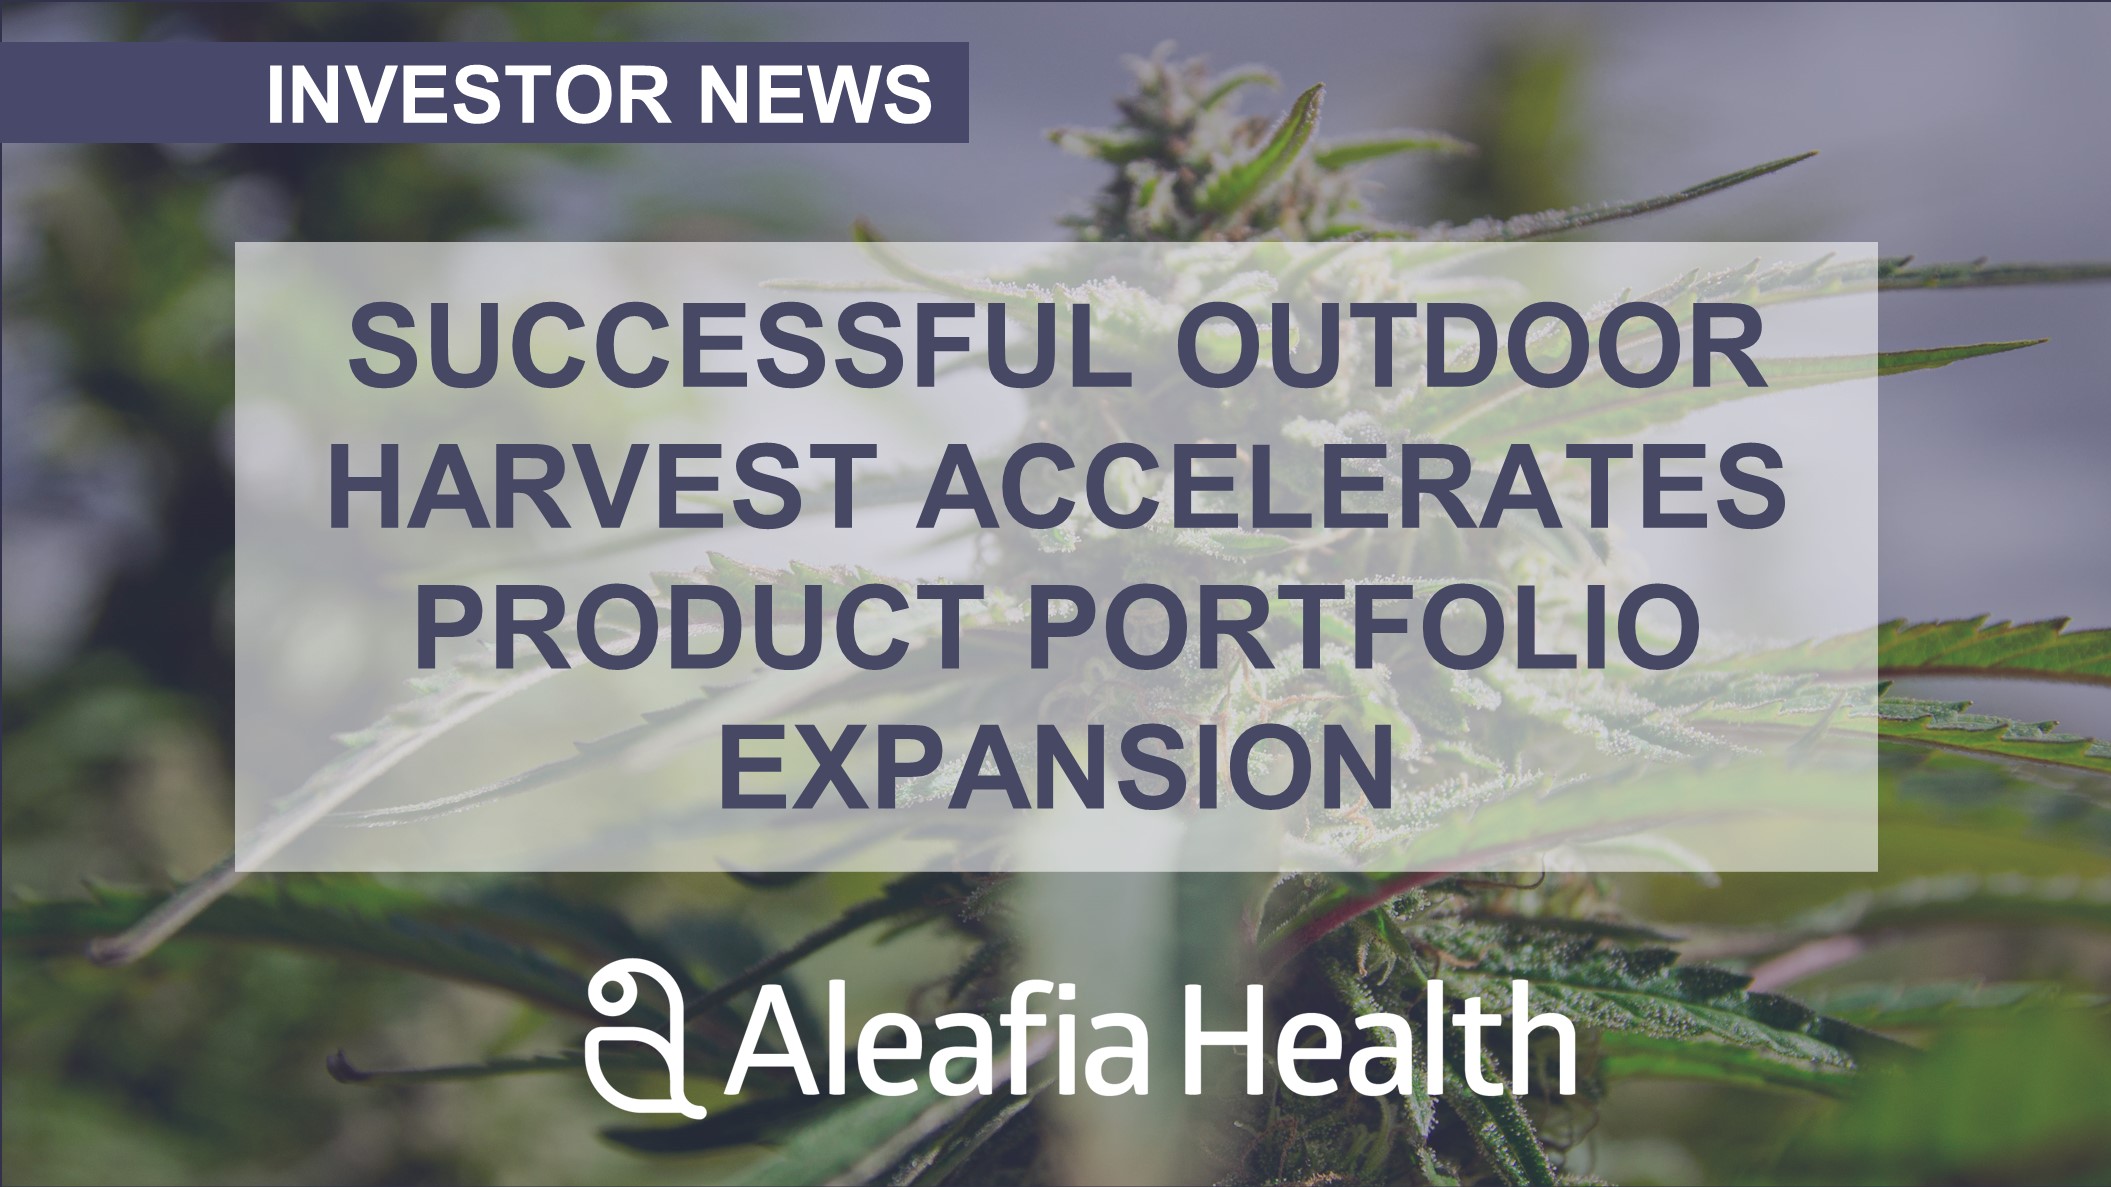 Aleafia Health Successful Outdoor Harvest Accelerates Product Portfolio Expansion